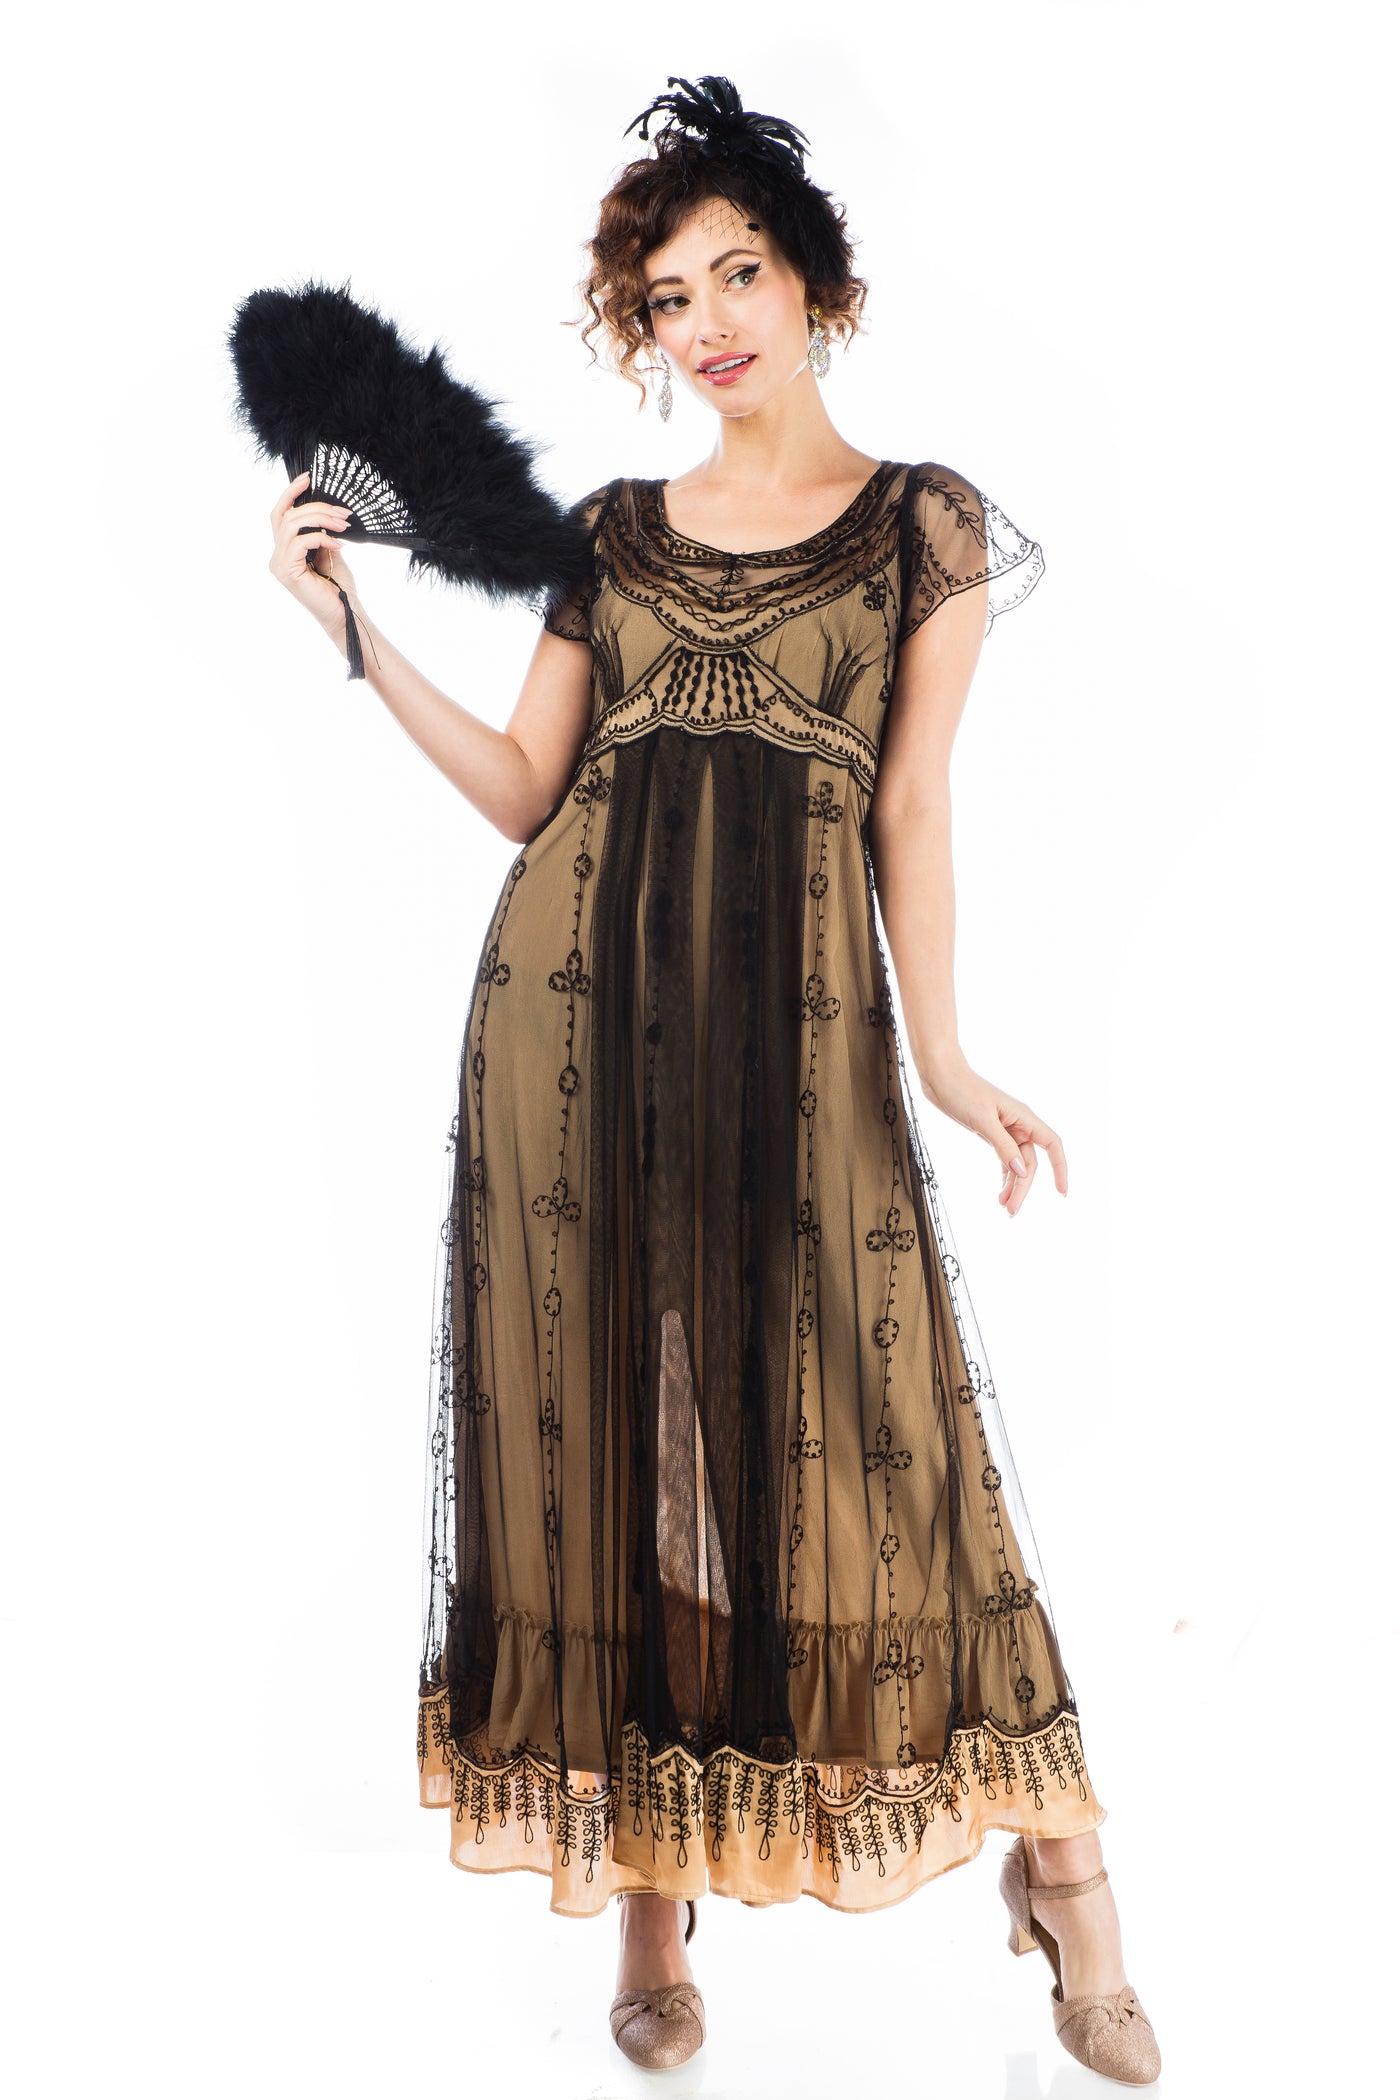 Izabella-Victorian-Style-Dress-in-Black-Gold-by-Nataya-1